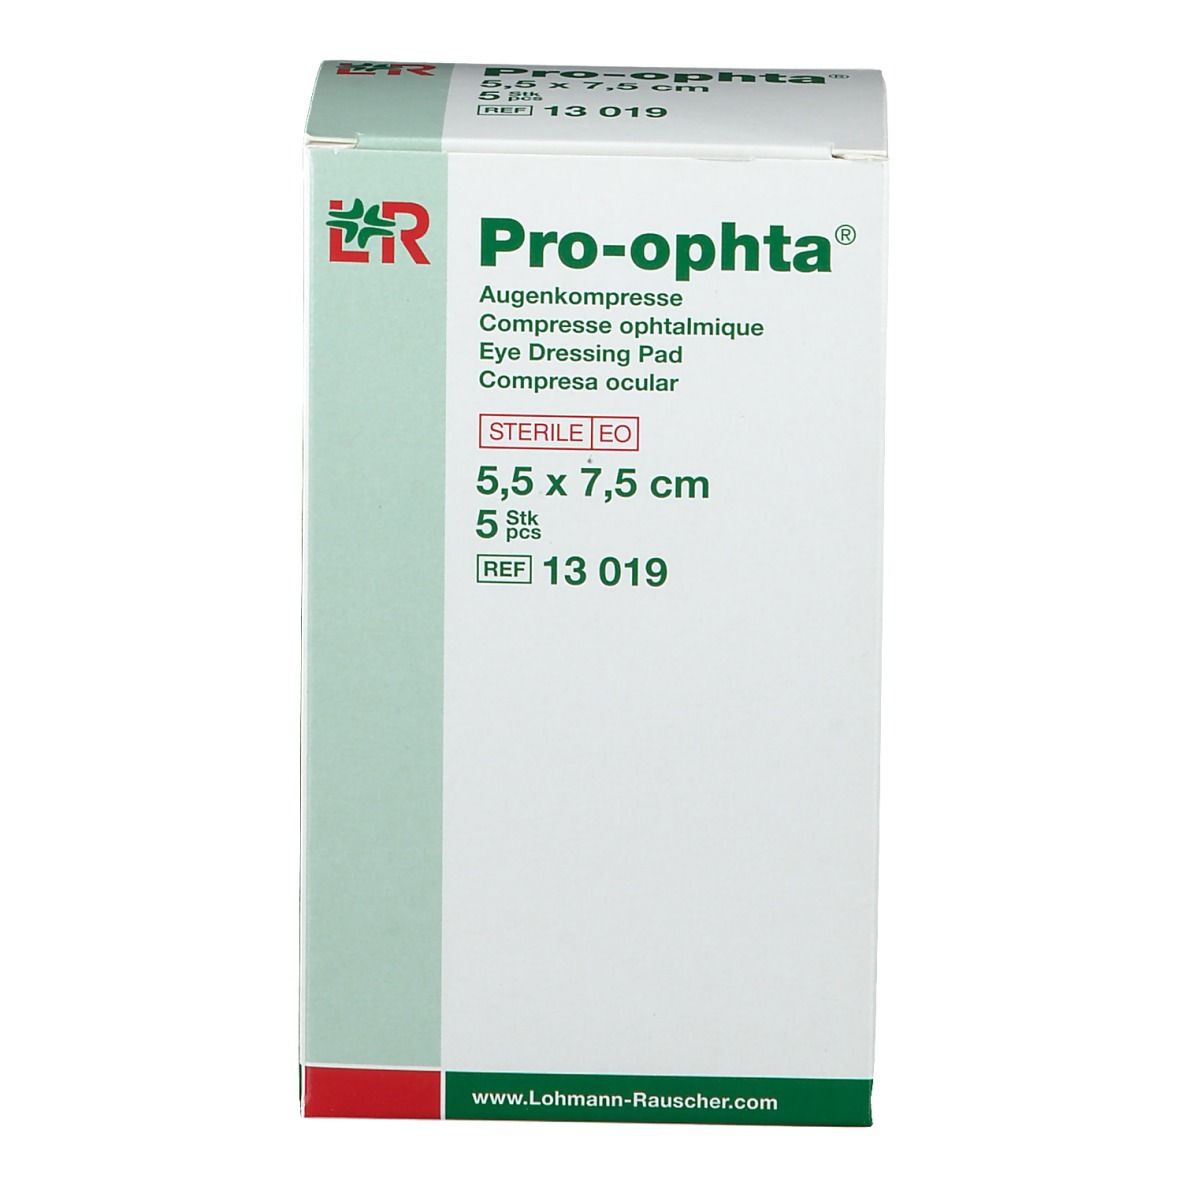 Pro-ophta® Augenkompresse 5,5 cm x 7,5 cm steril